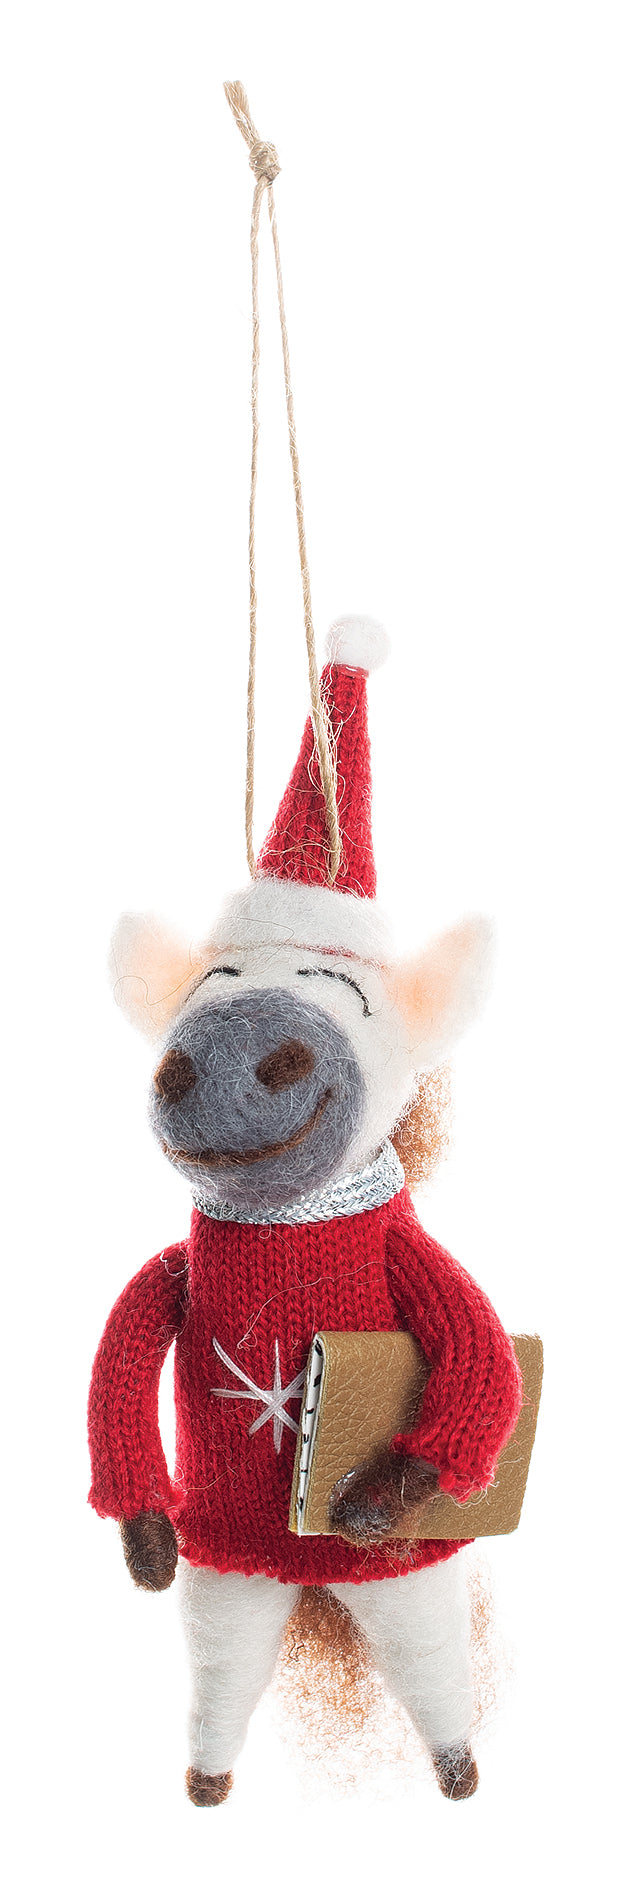 Felt Donkey In A Sweater & Hat Ornament